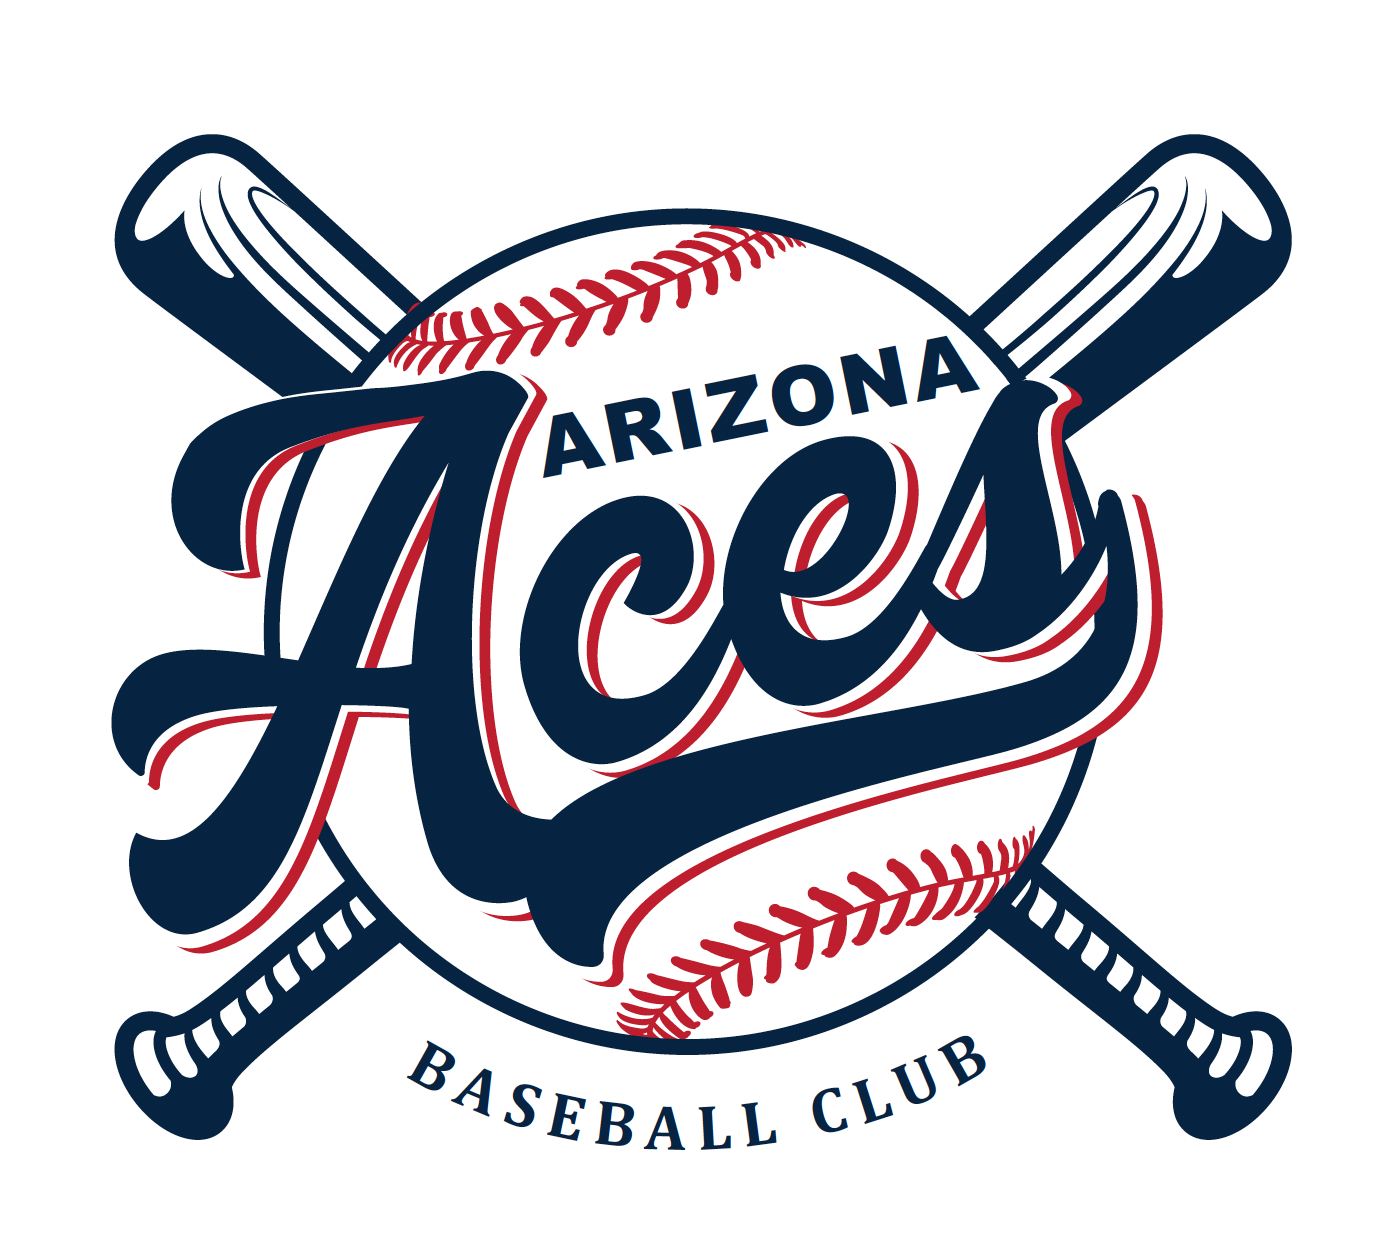 Arizona Aces Baseball Club